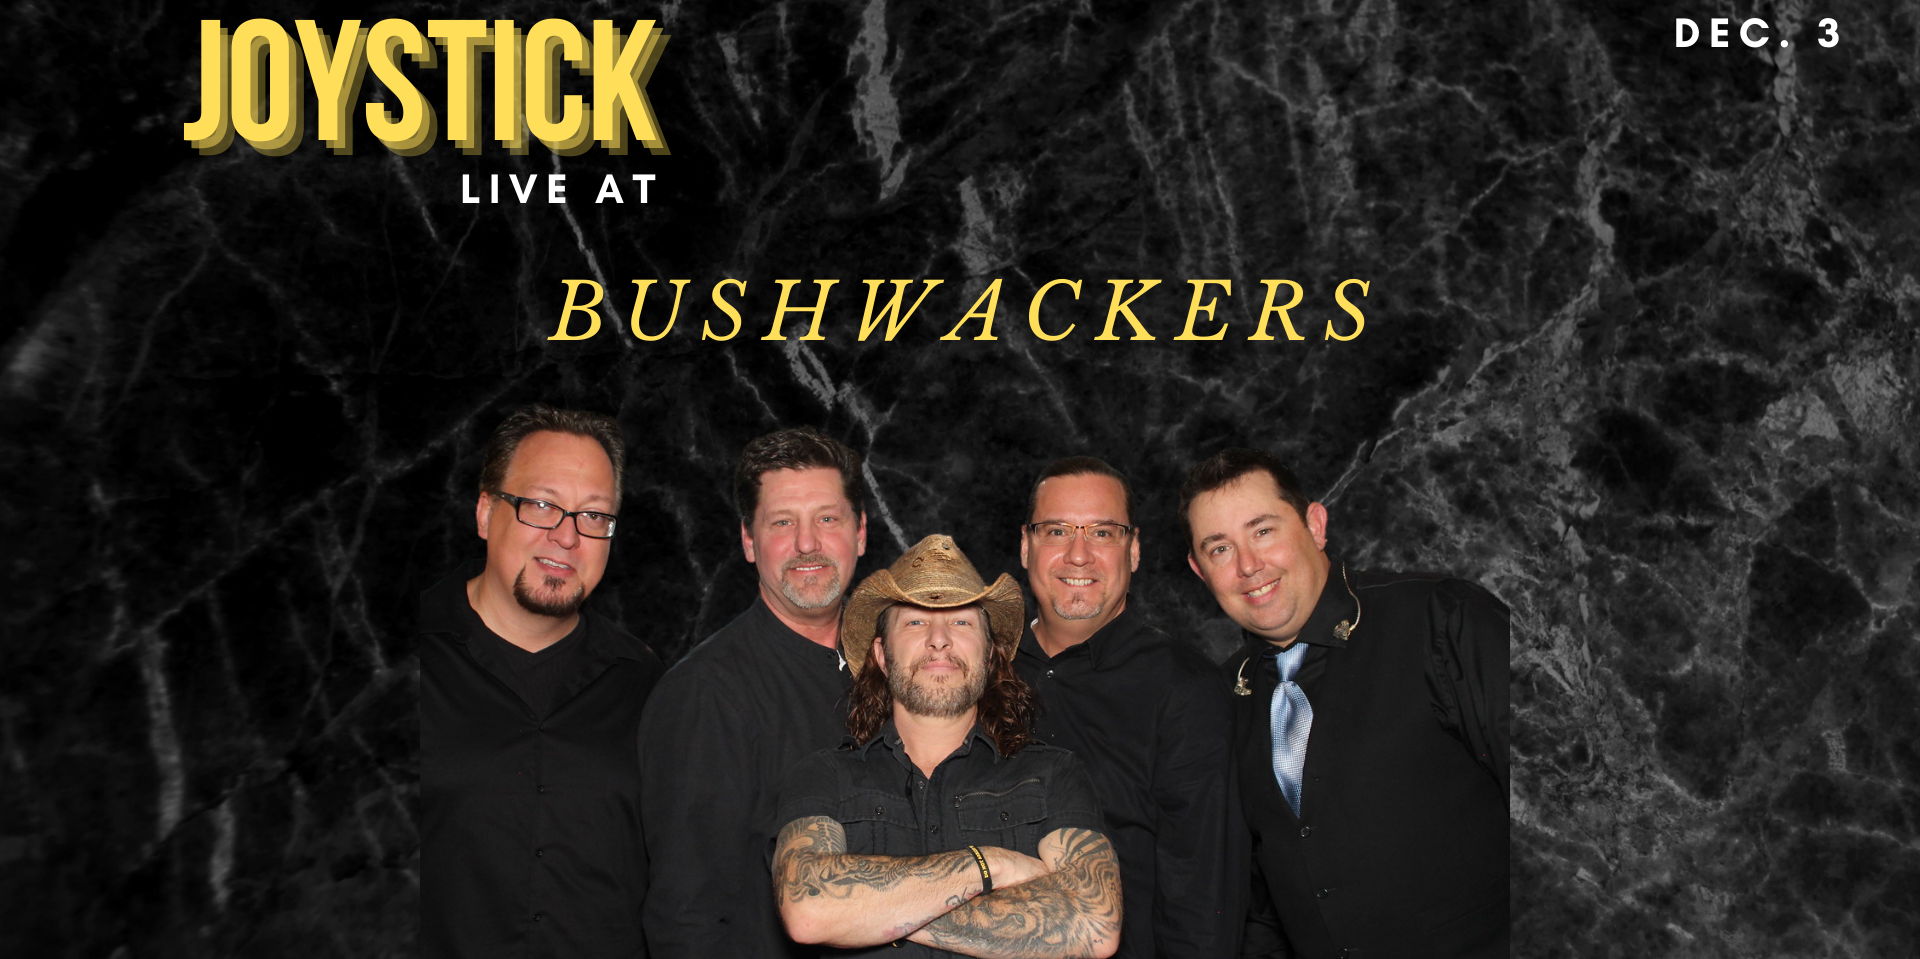 Bushwackers Live: Joystick promotional image